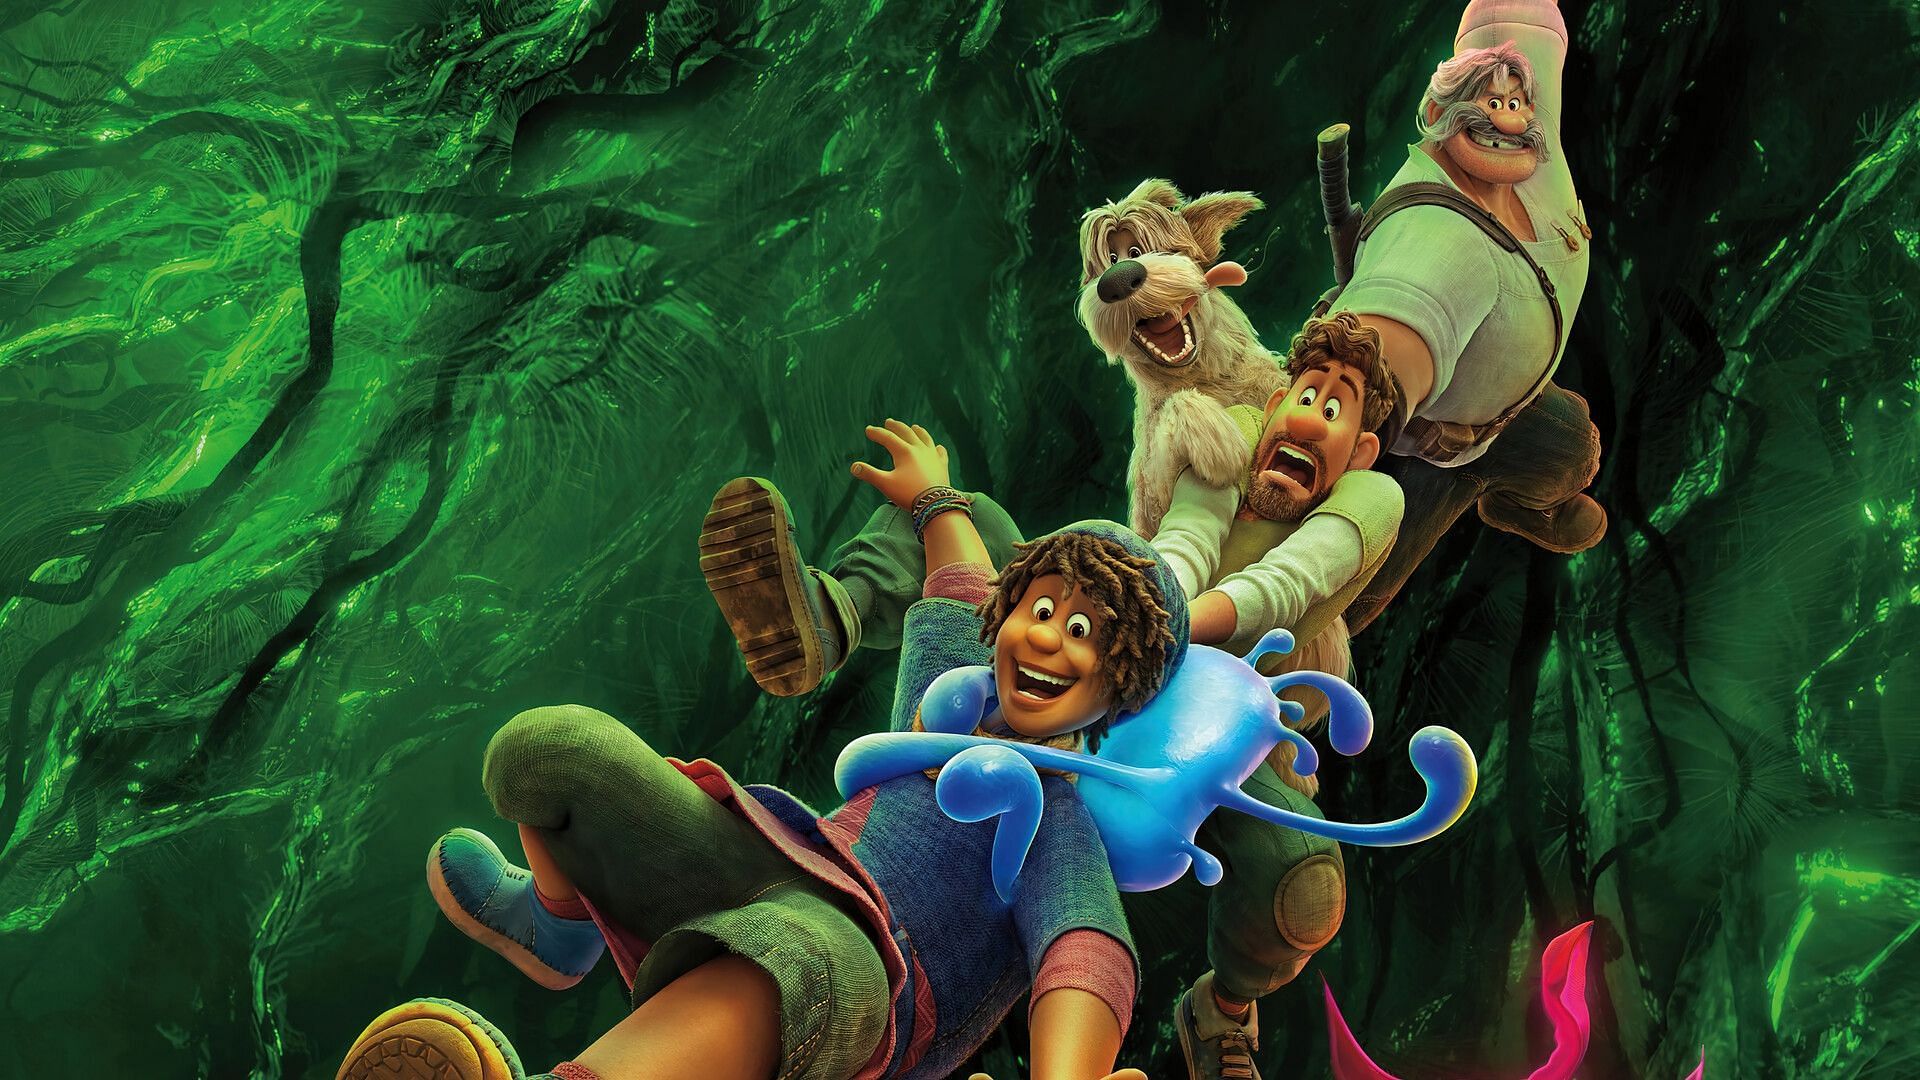 A poster for Strange World, the latest Disney Pixar film (Image via Disney)